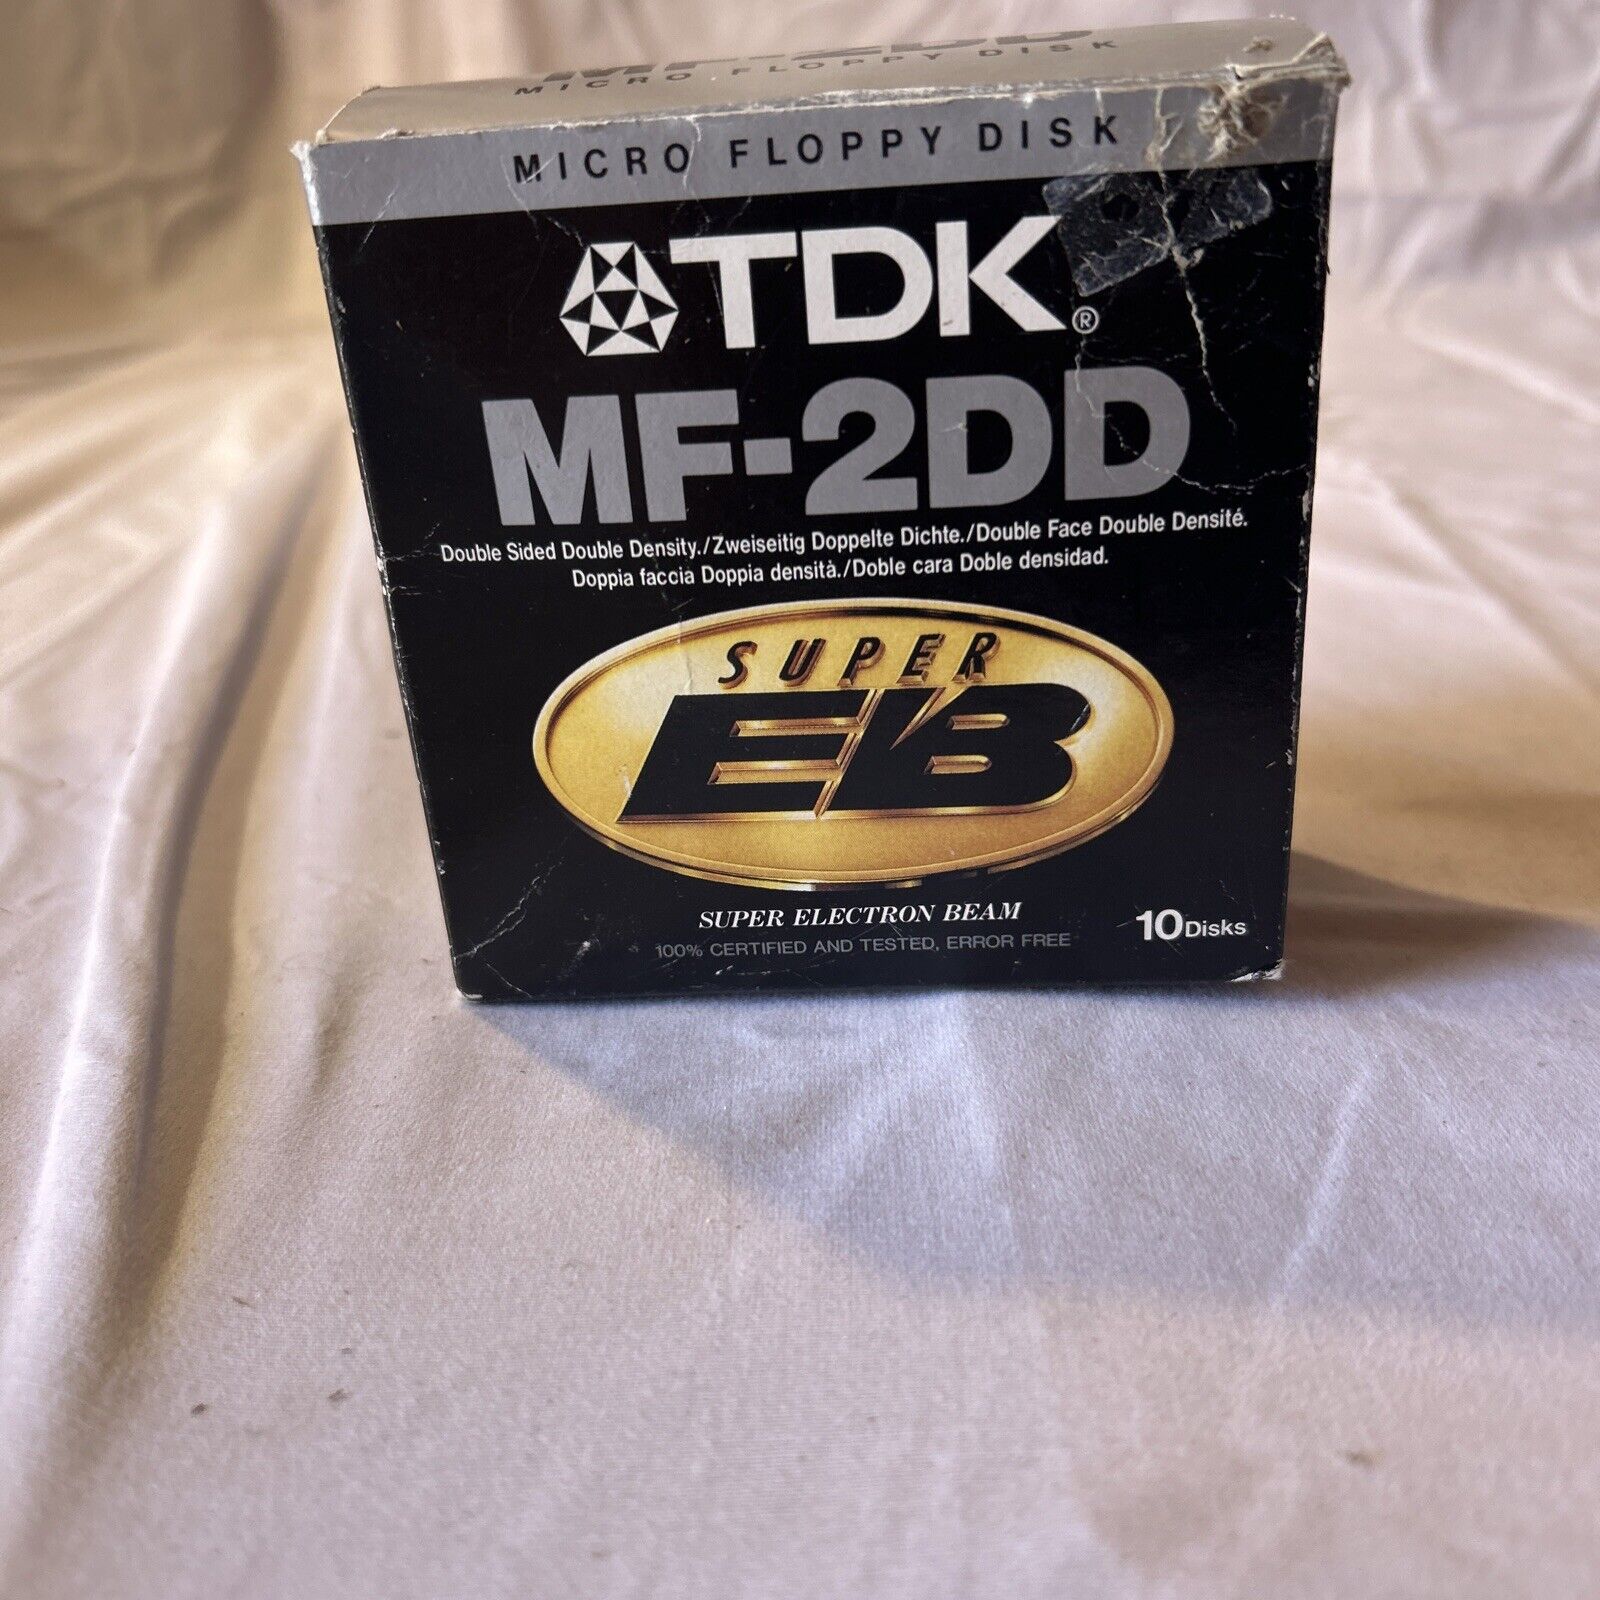 Vintage Media New TDK Pack of 10 MF-2DD Micro Floppy Disks Super EB